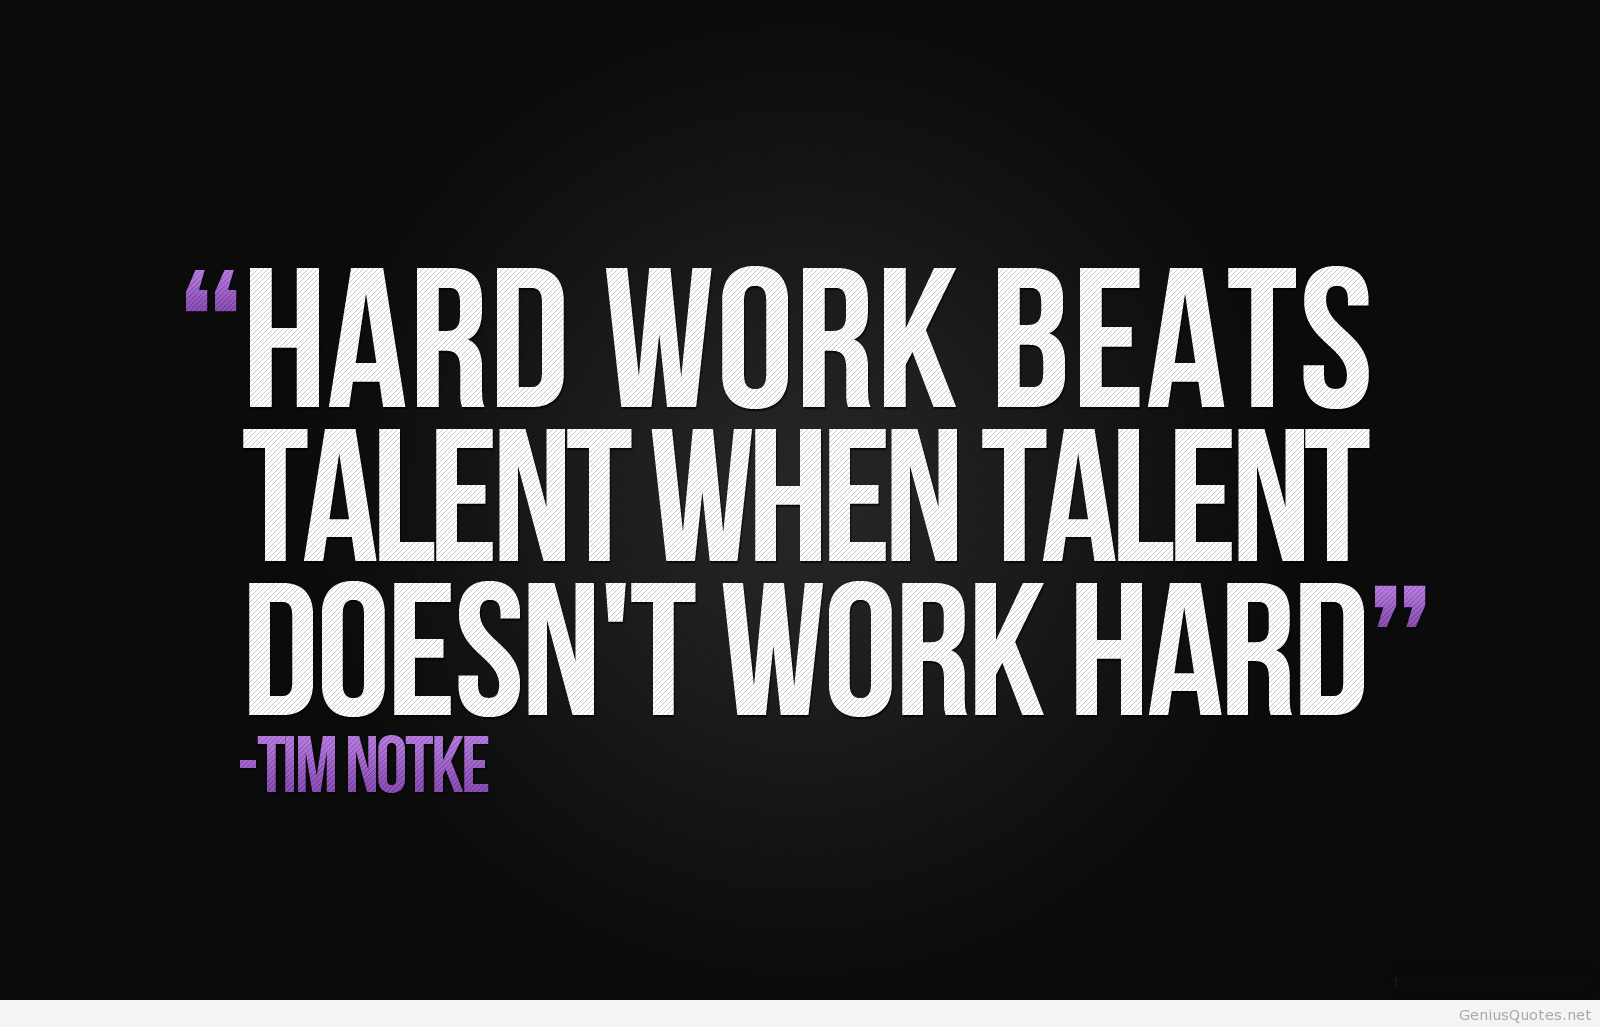 Hard work beats talent when talent fails to work hard. Tim Notke